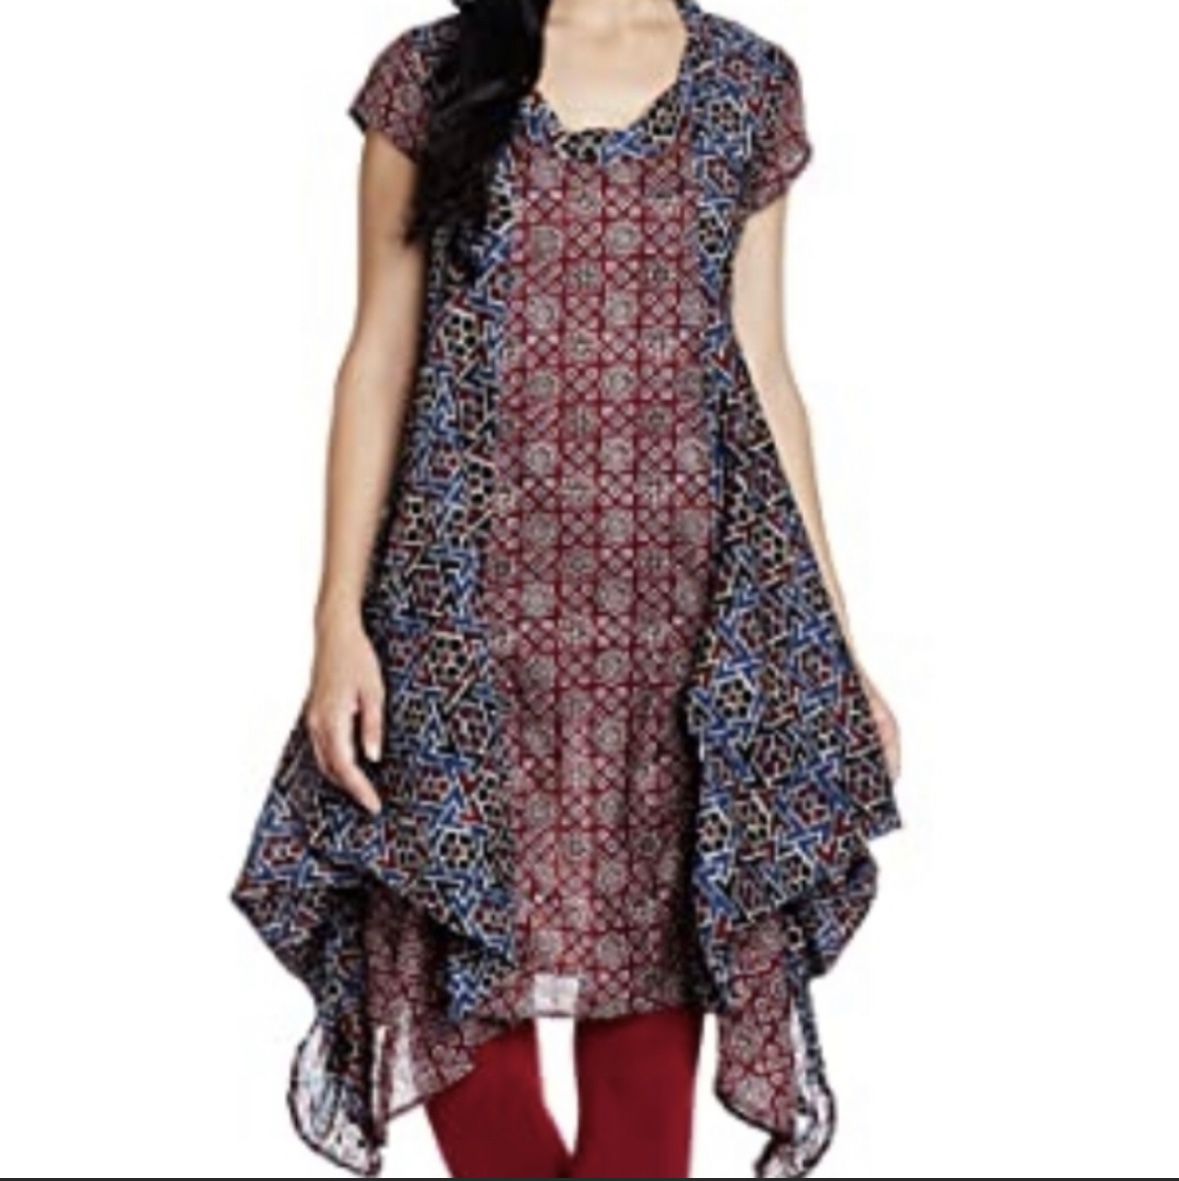 Biba 100% Cotton Printed Ajrakh Indian Dress Tunic Kurta. Chest: 36-37” Size S-M